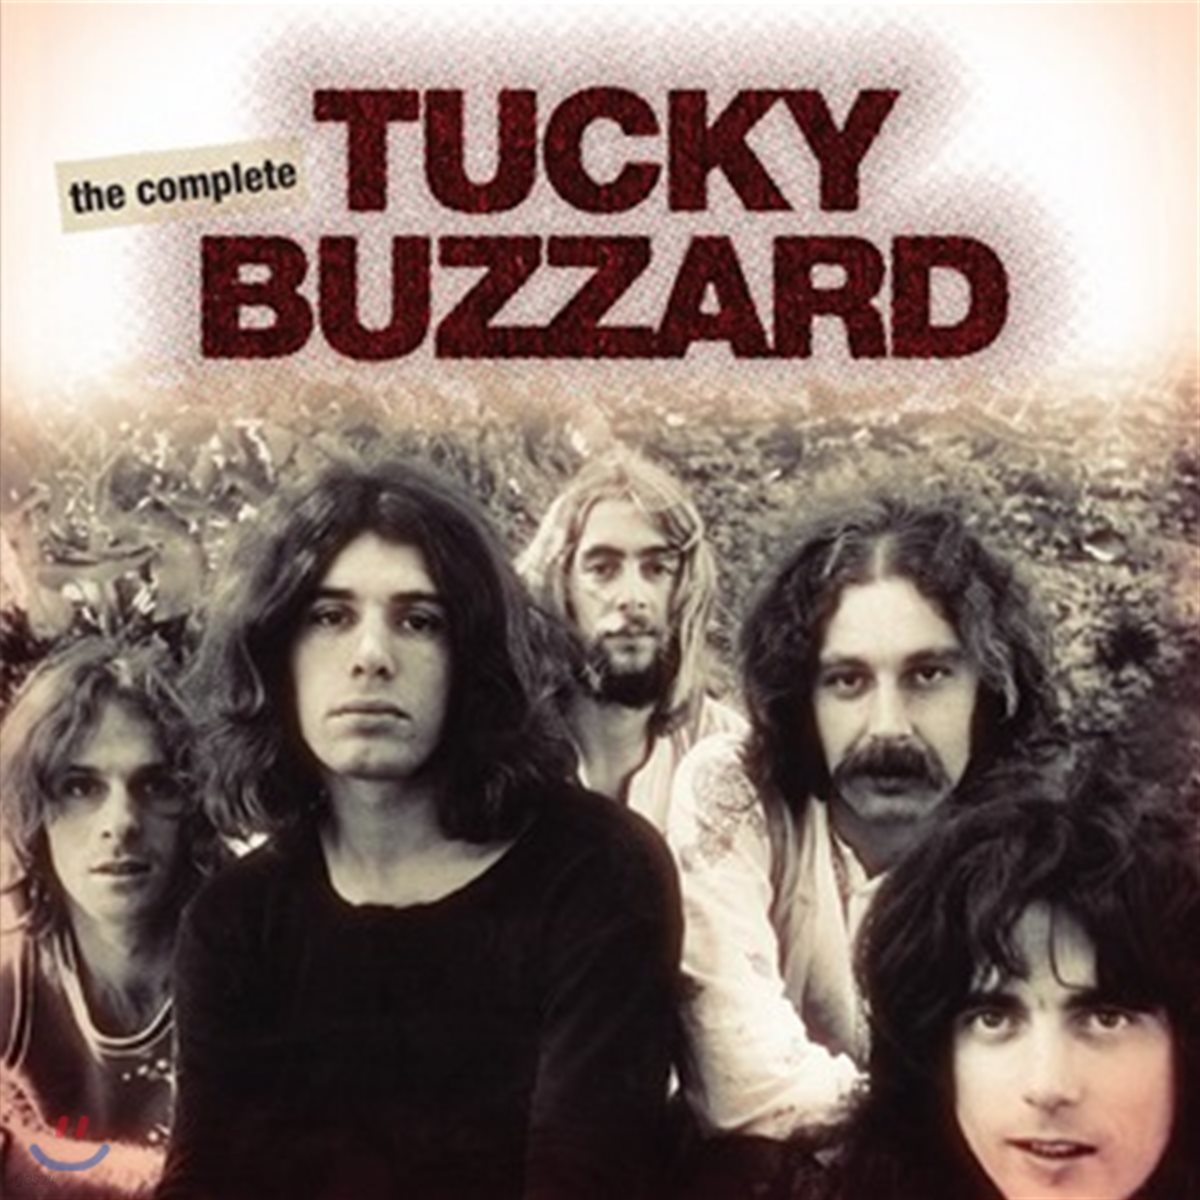 Tucky Buzzard - The Complete (Deluxe Edition)